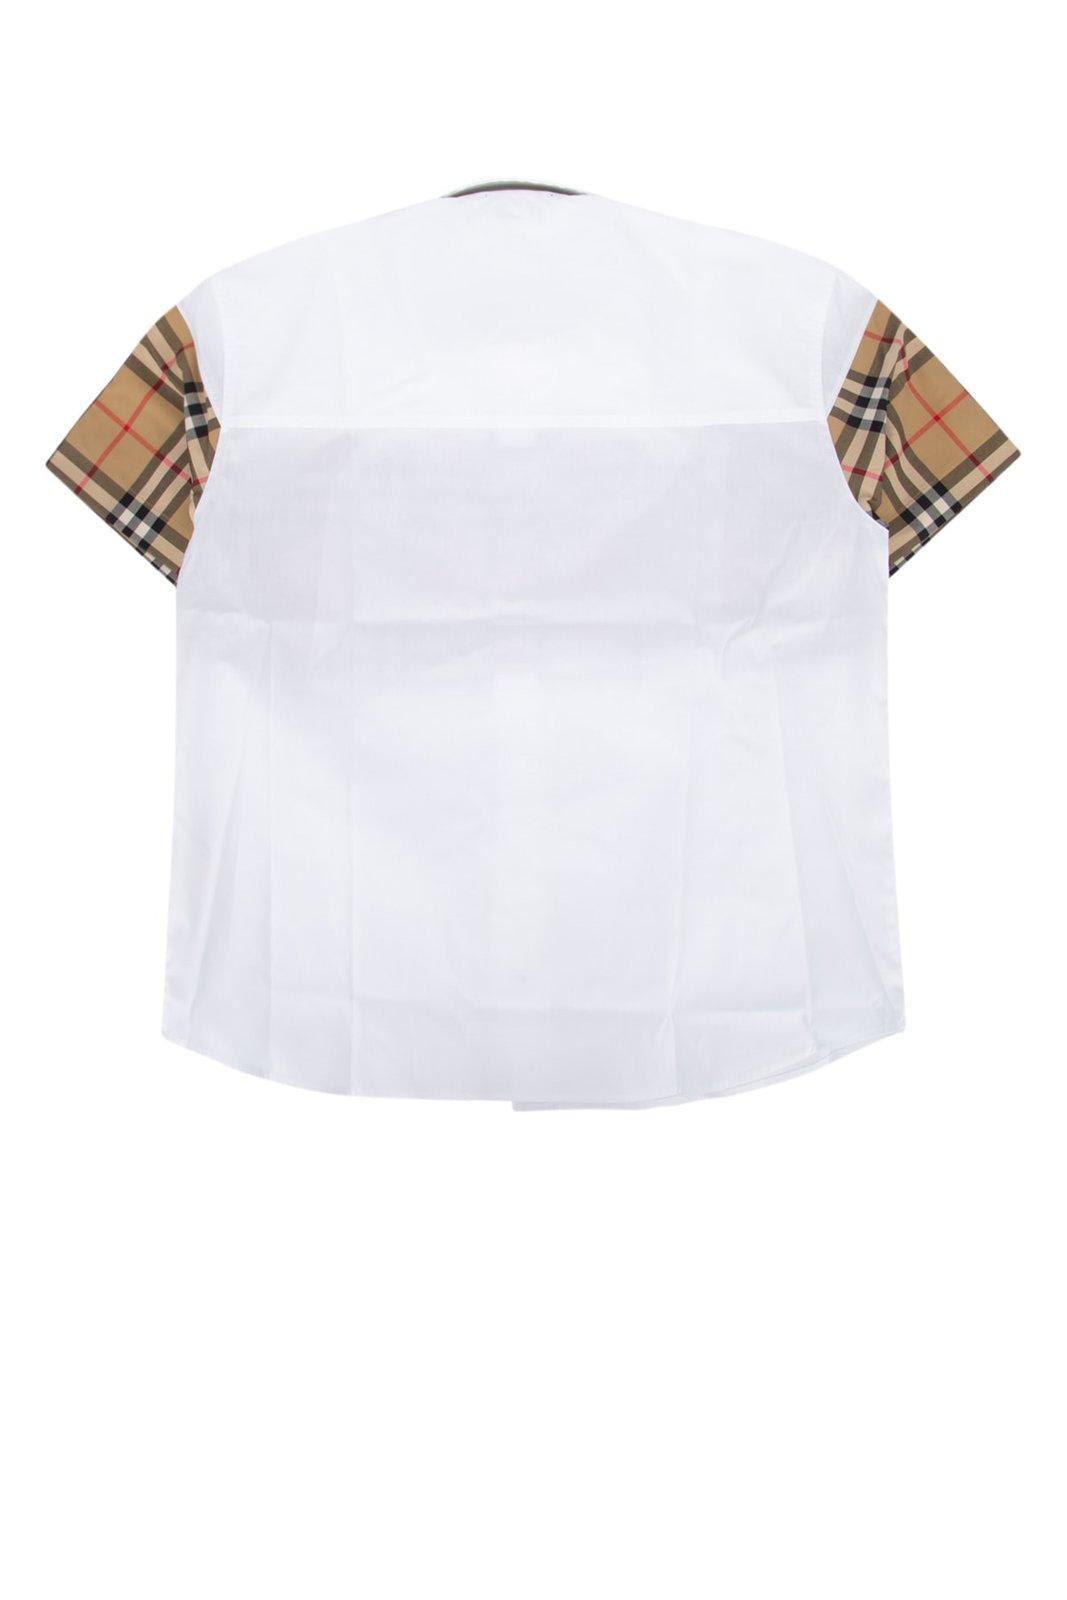 Shop Burberry Check Pattern Short-sleeved Shirt